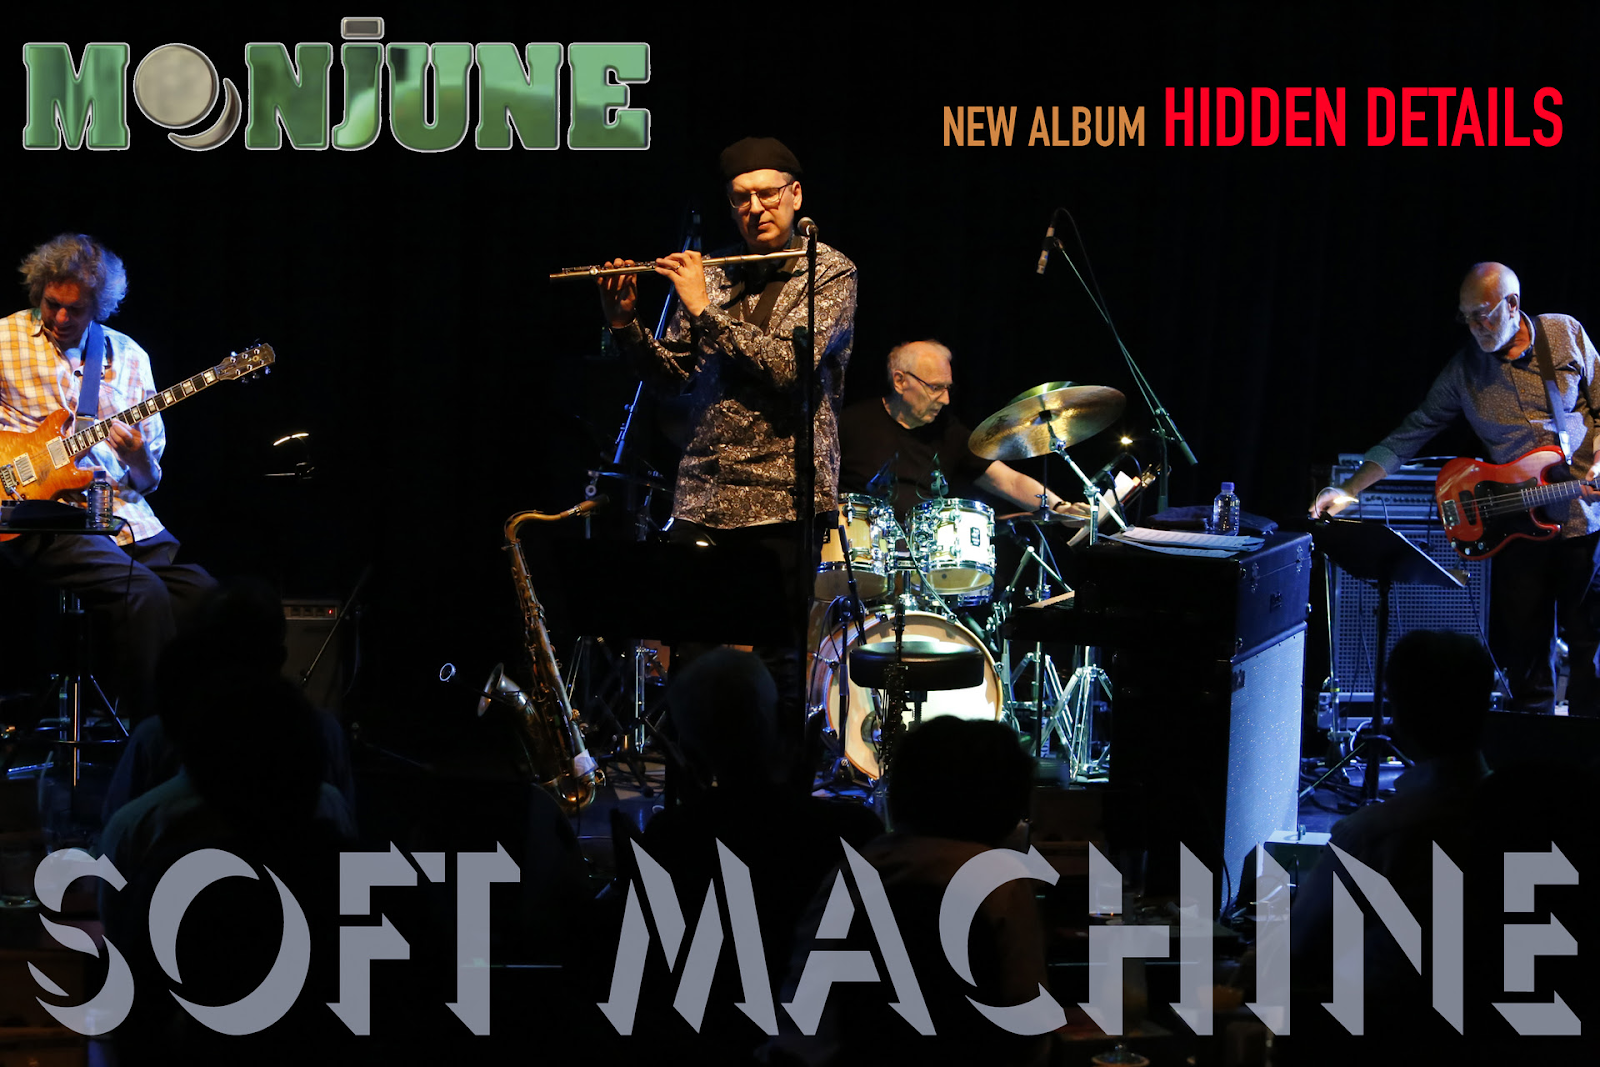 Hide detailing. Soft Machine hidden details. The Soft Machine. Soft Machine группа. Soft Machine Fifth.